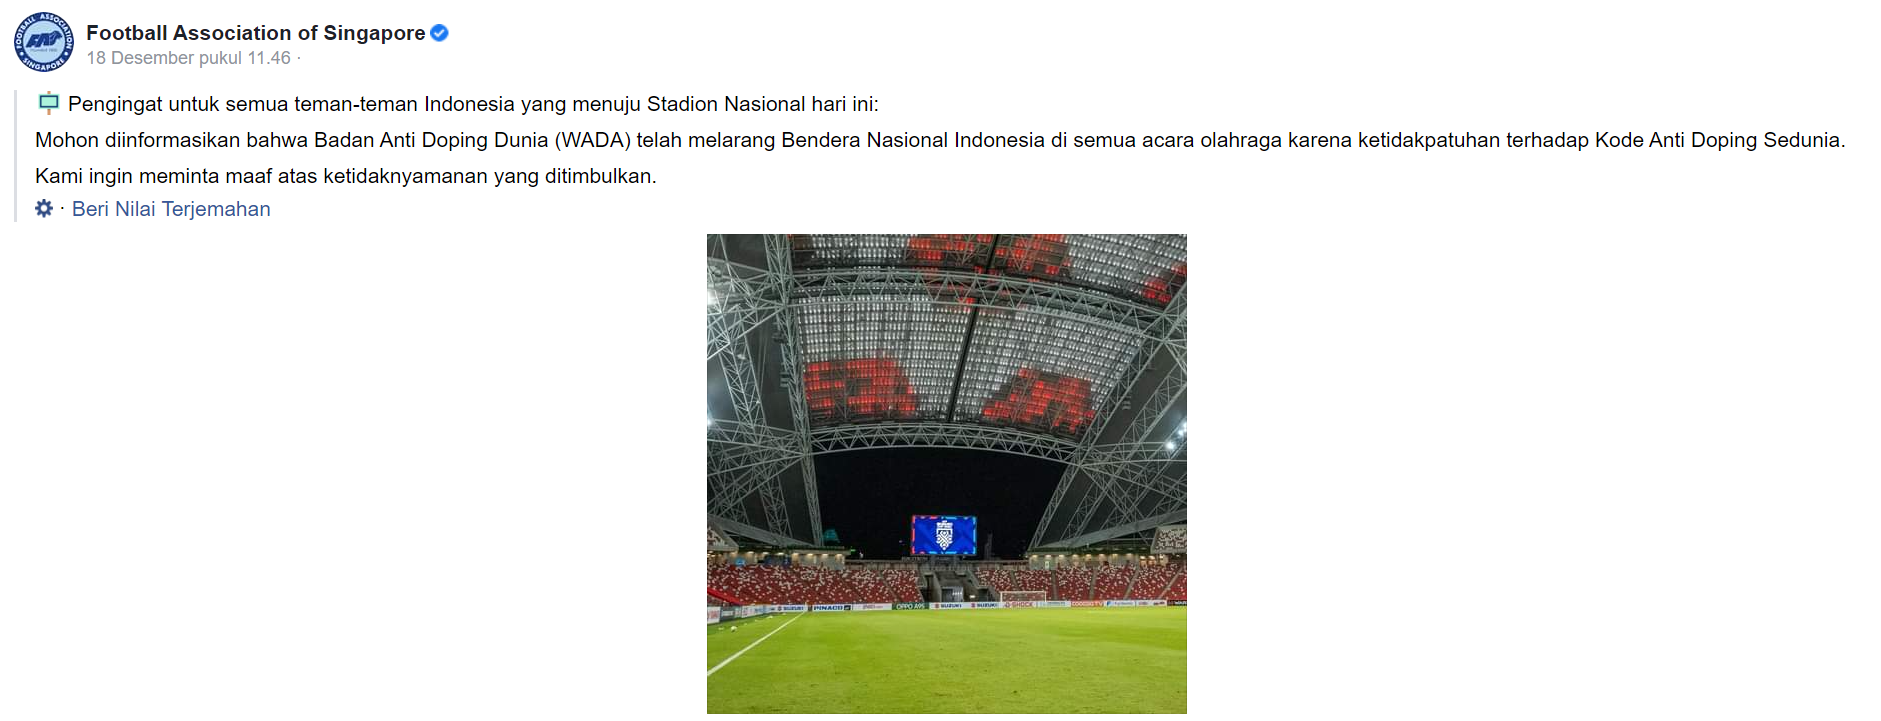 football association of singapore melarang suporter indonesia untuk bawa bendera